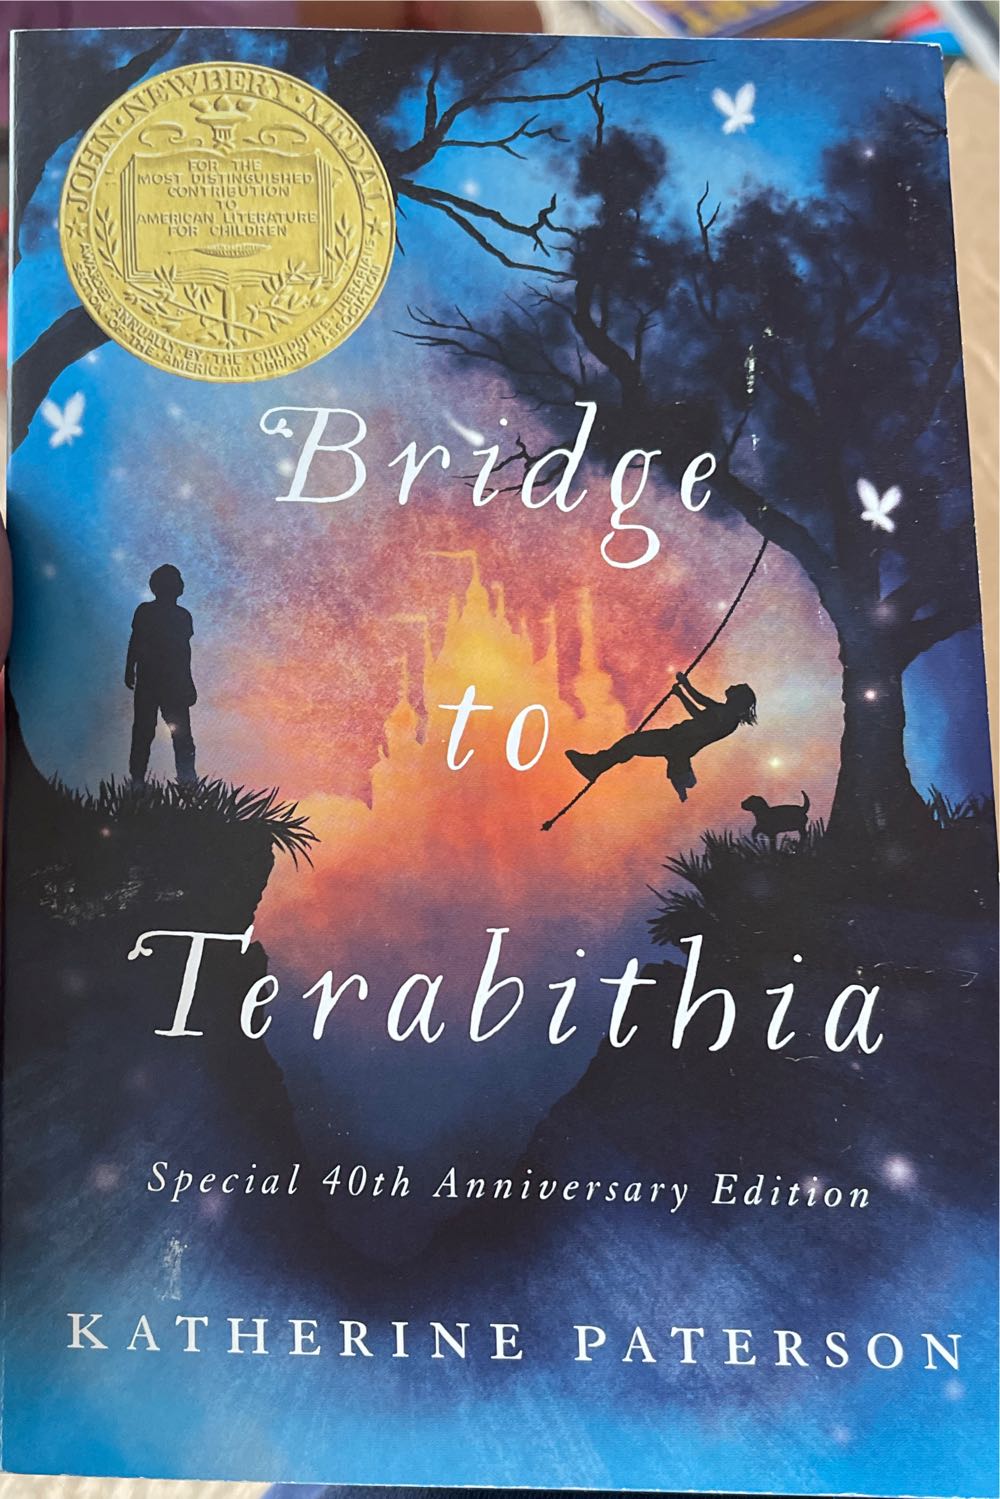 Bridge to Terabithia - Katherine Paterson (HarperCollins - Paperback) book collectible [Barcode 9780064401845] - Main Image 3